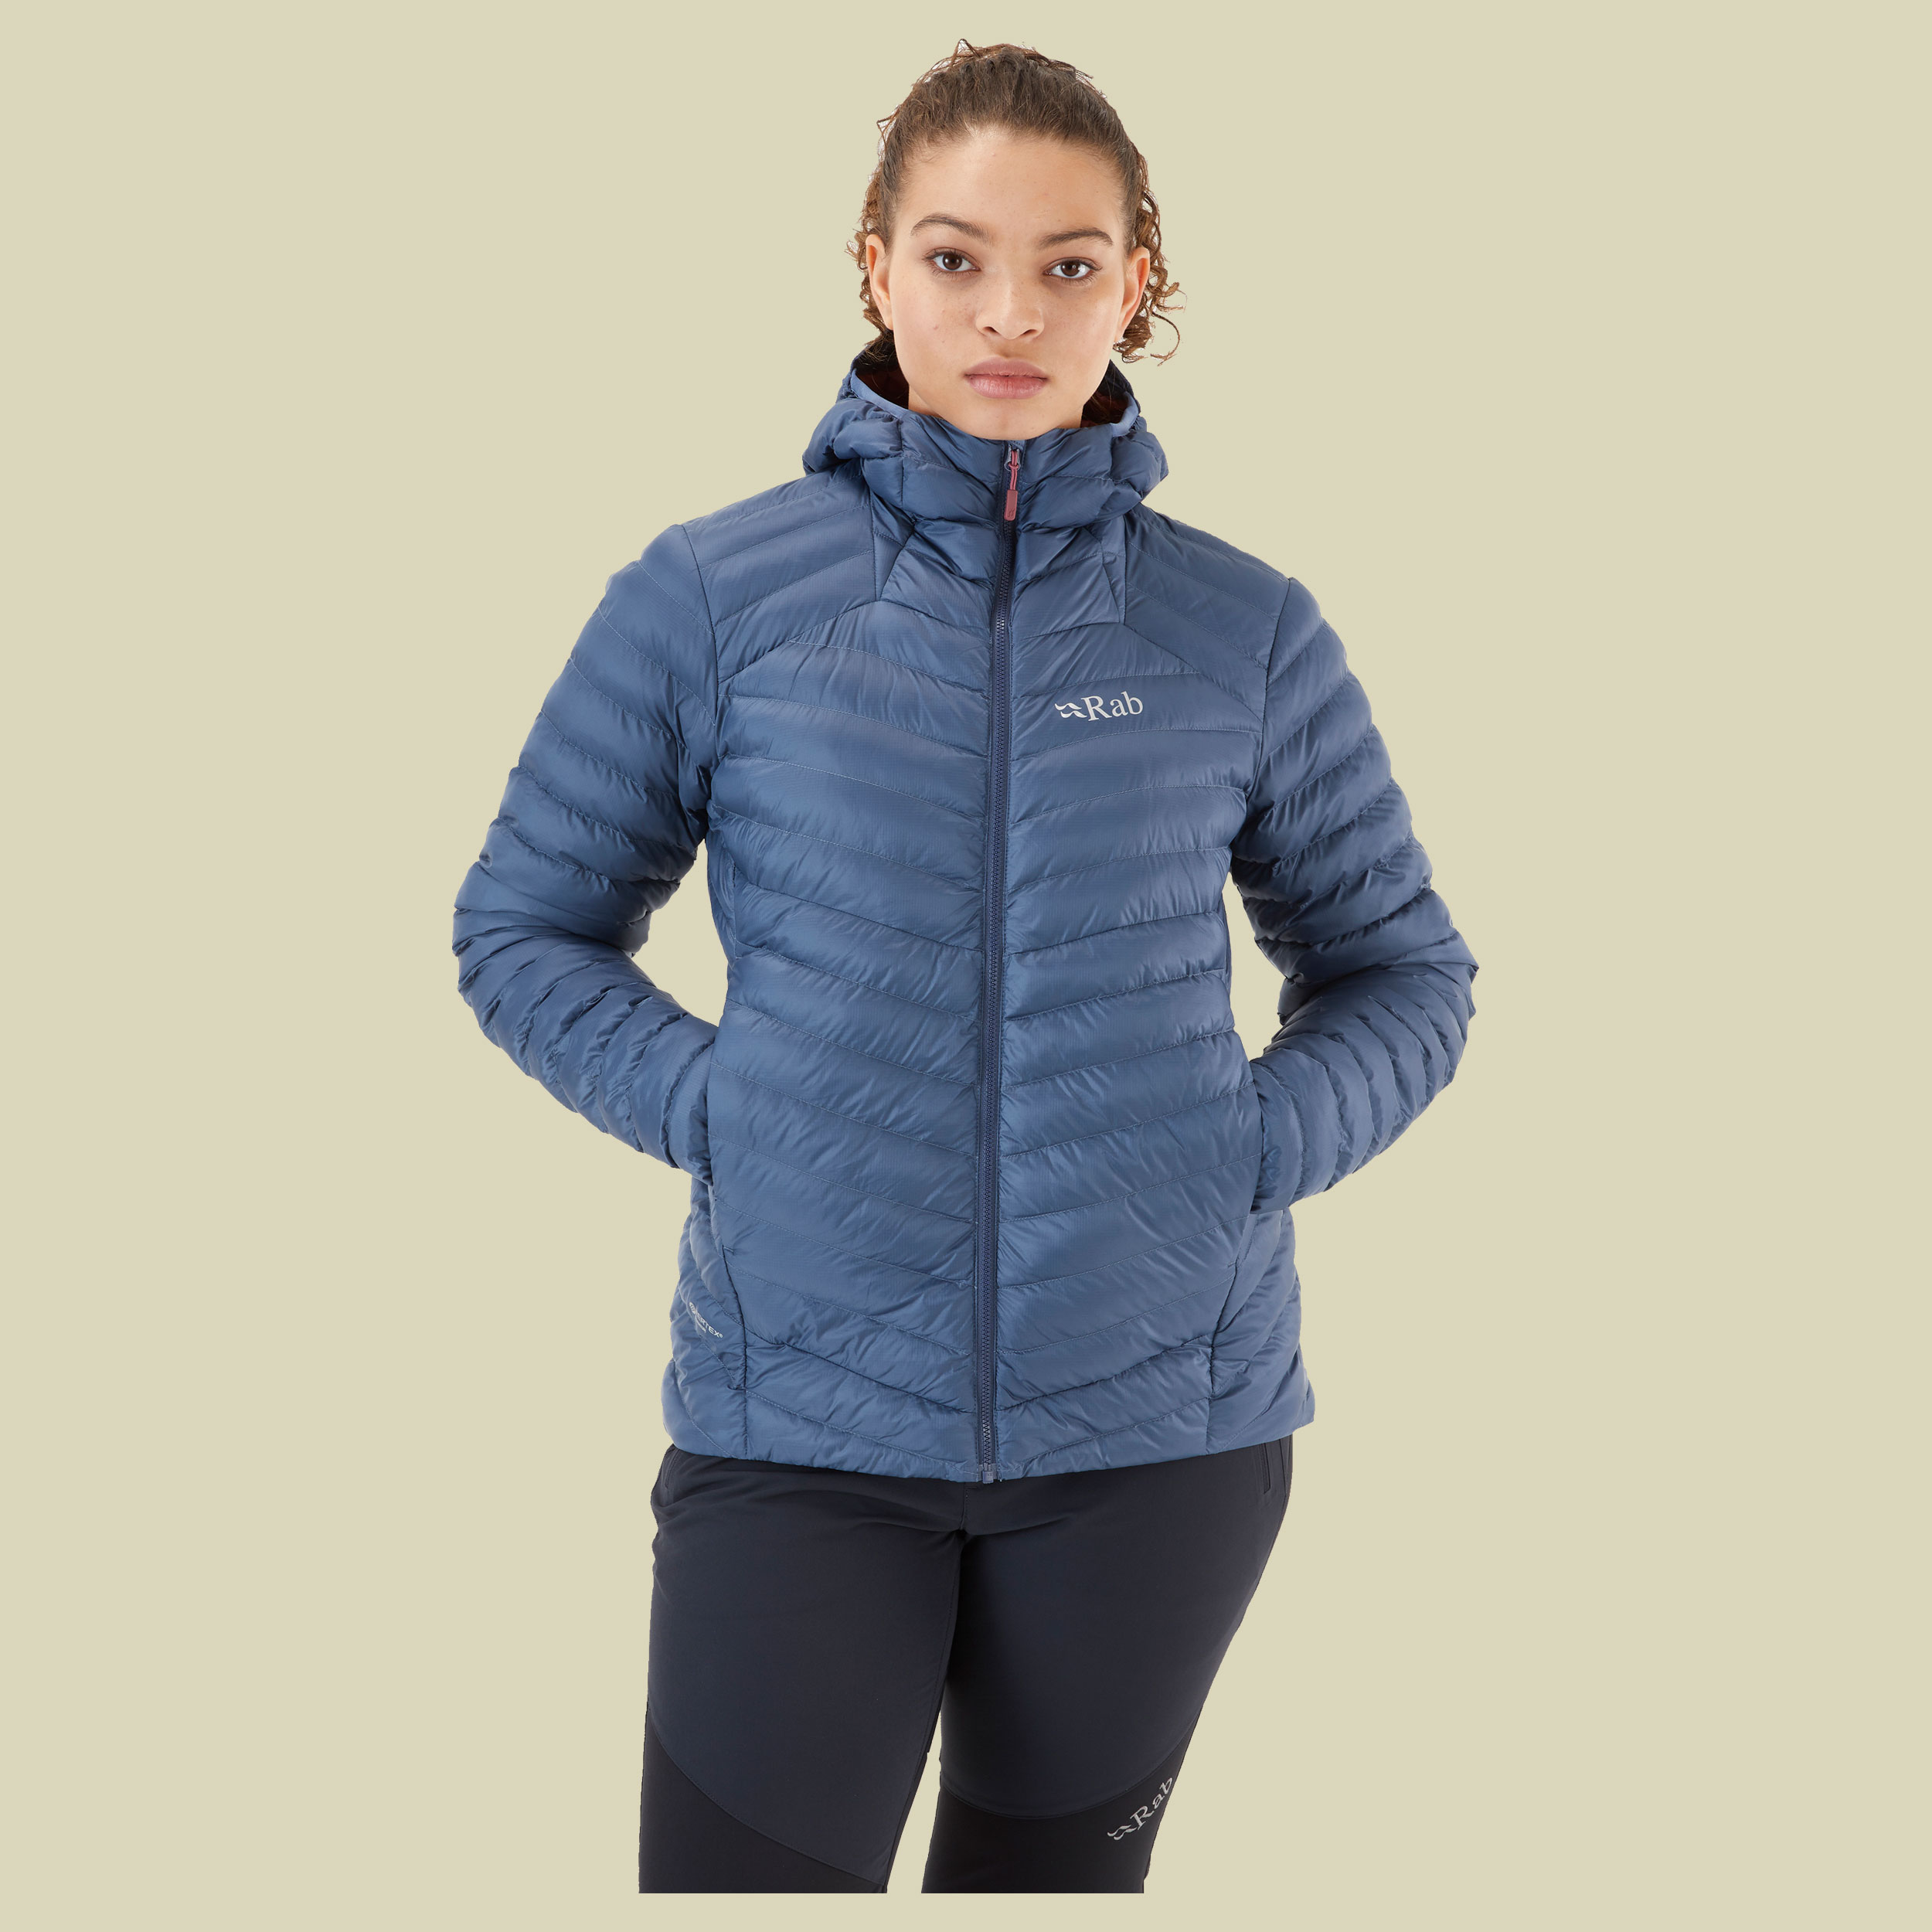 Cirrus Alpine Jacket Women Größe 36 (08) Farbe bering sea